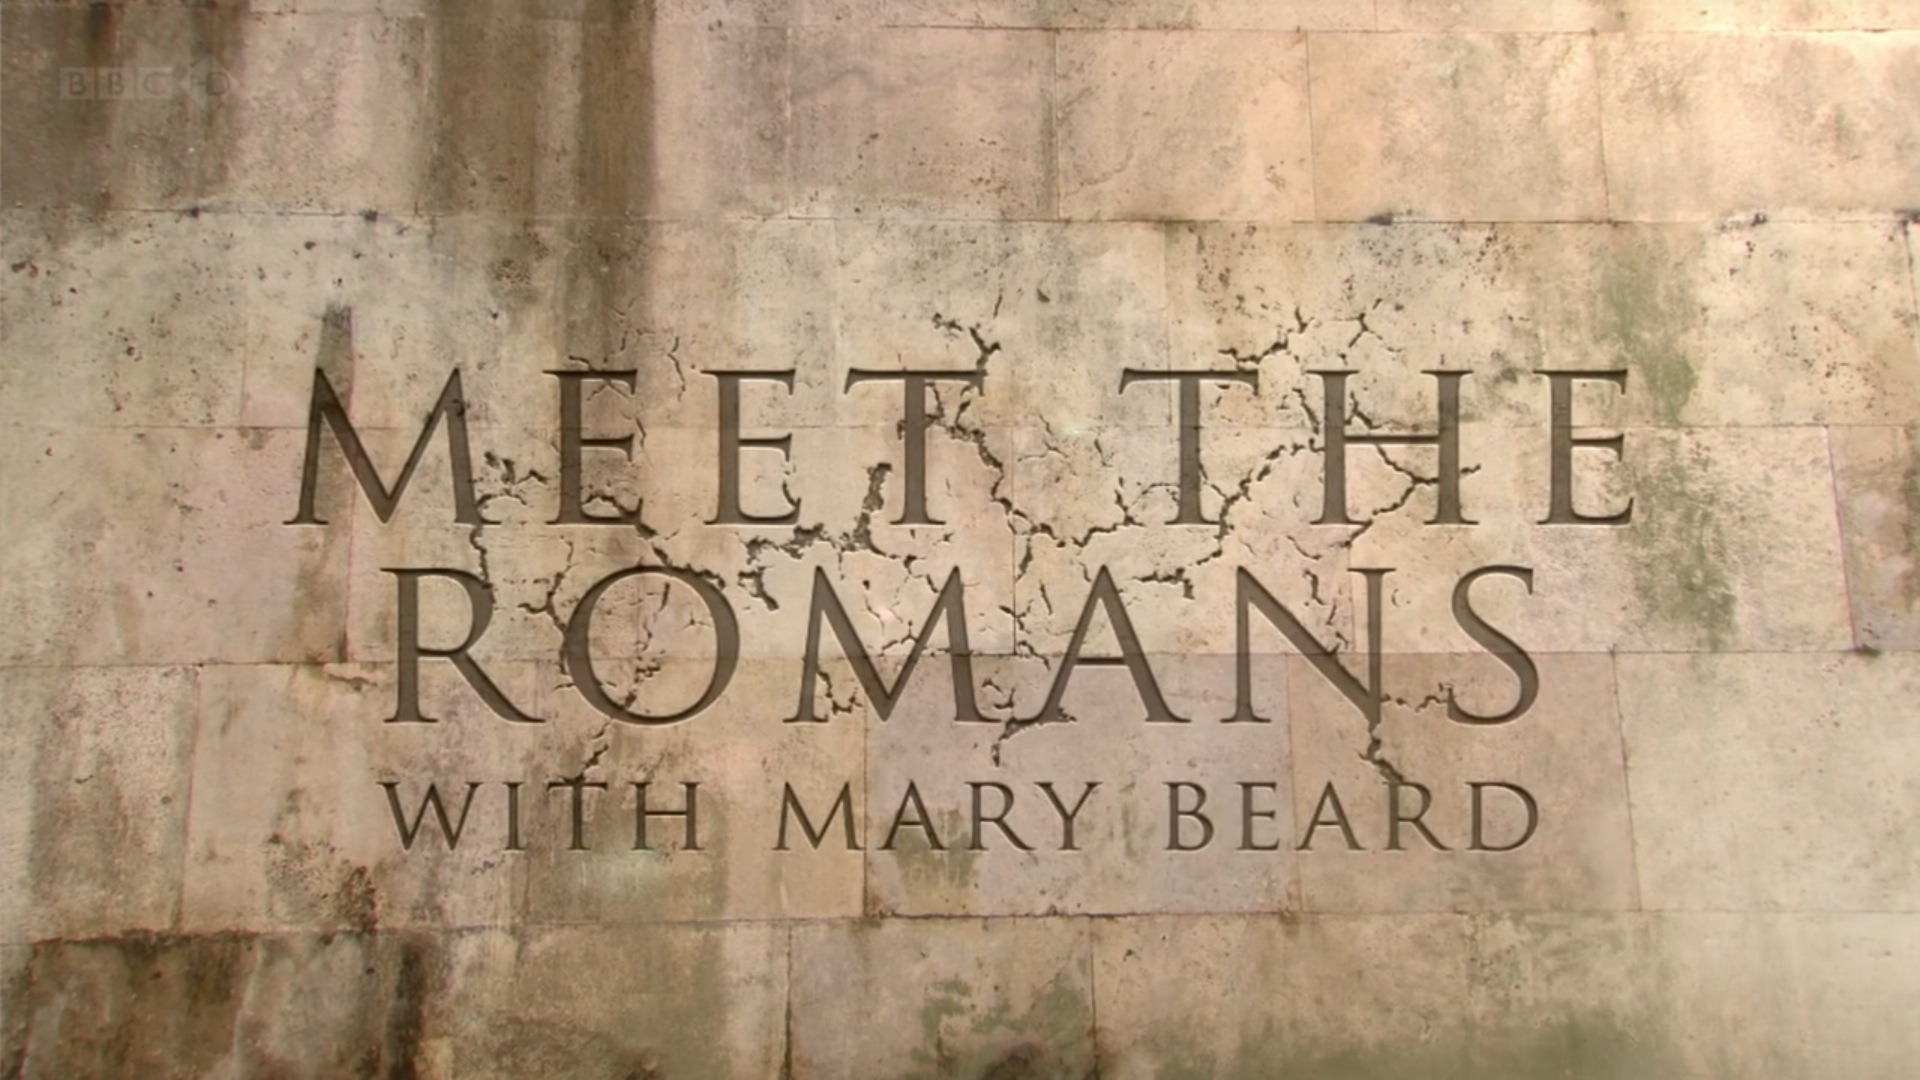 Show Meet the Romans with Mary Beard